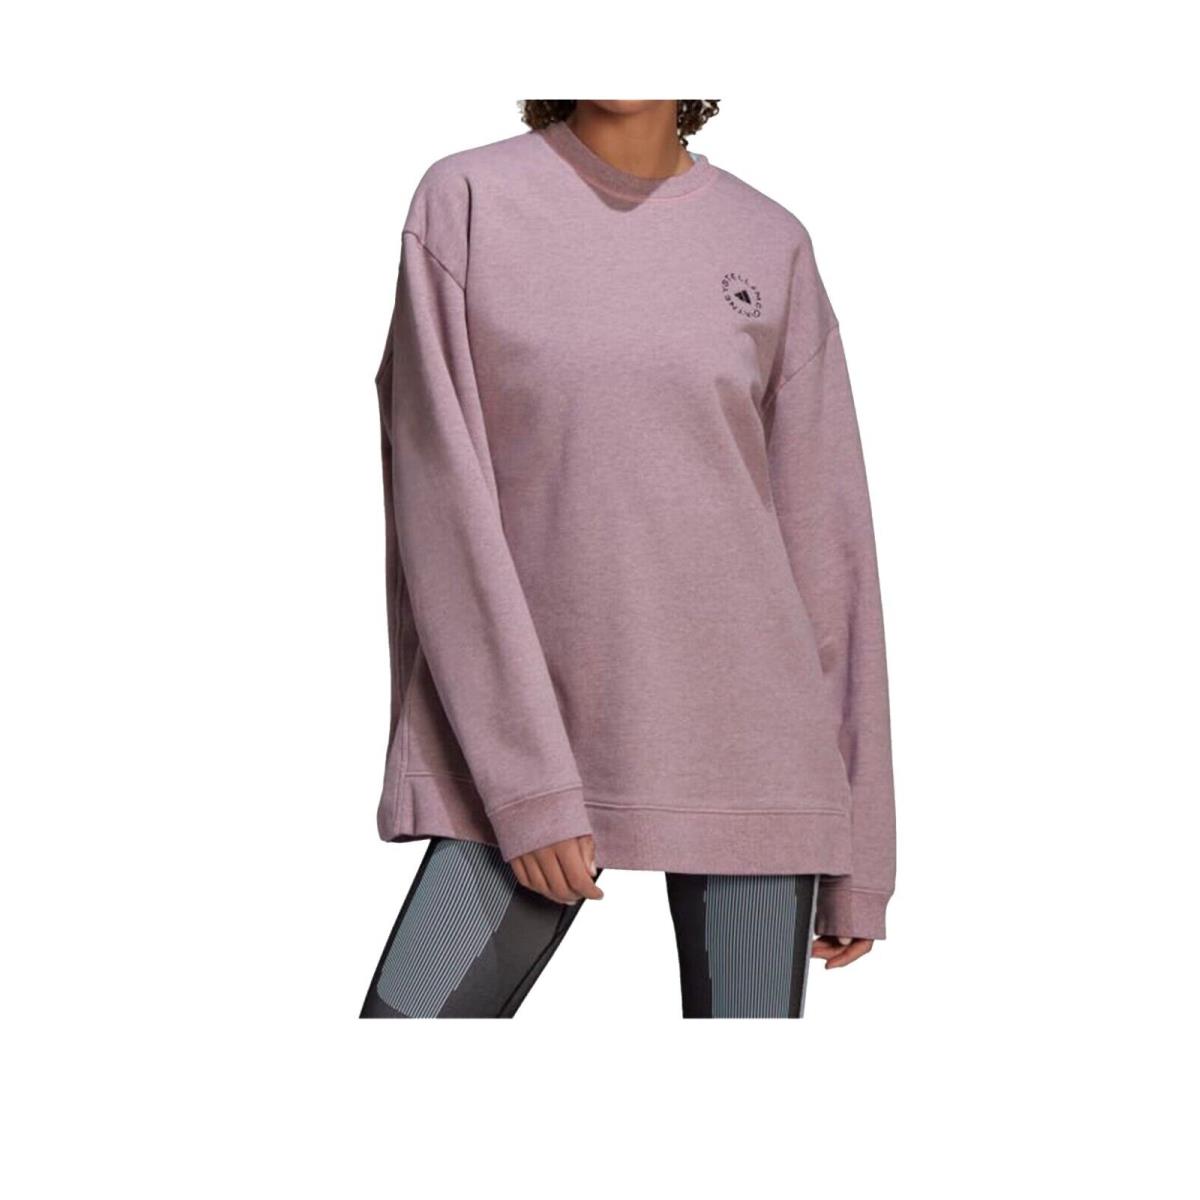 Adidas By Stella Mccartney Sportswear Sweatshirt Easy Pink Size S